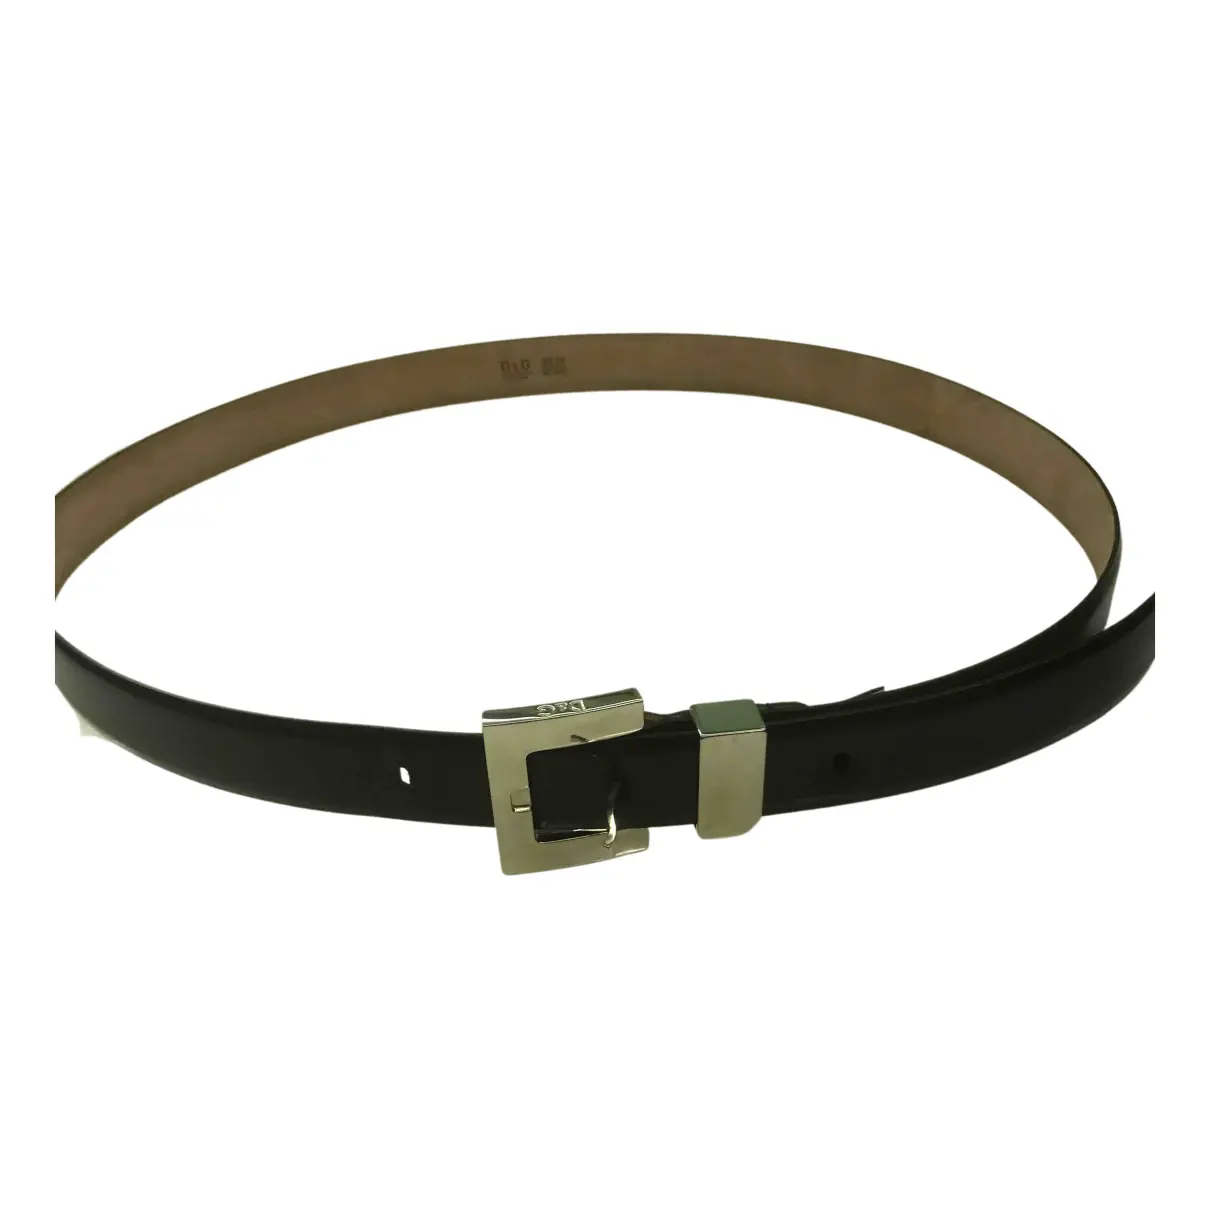 Leather belt D&G